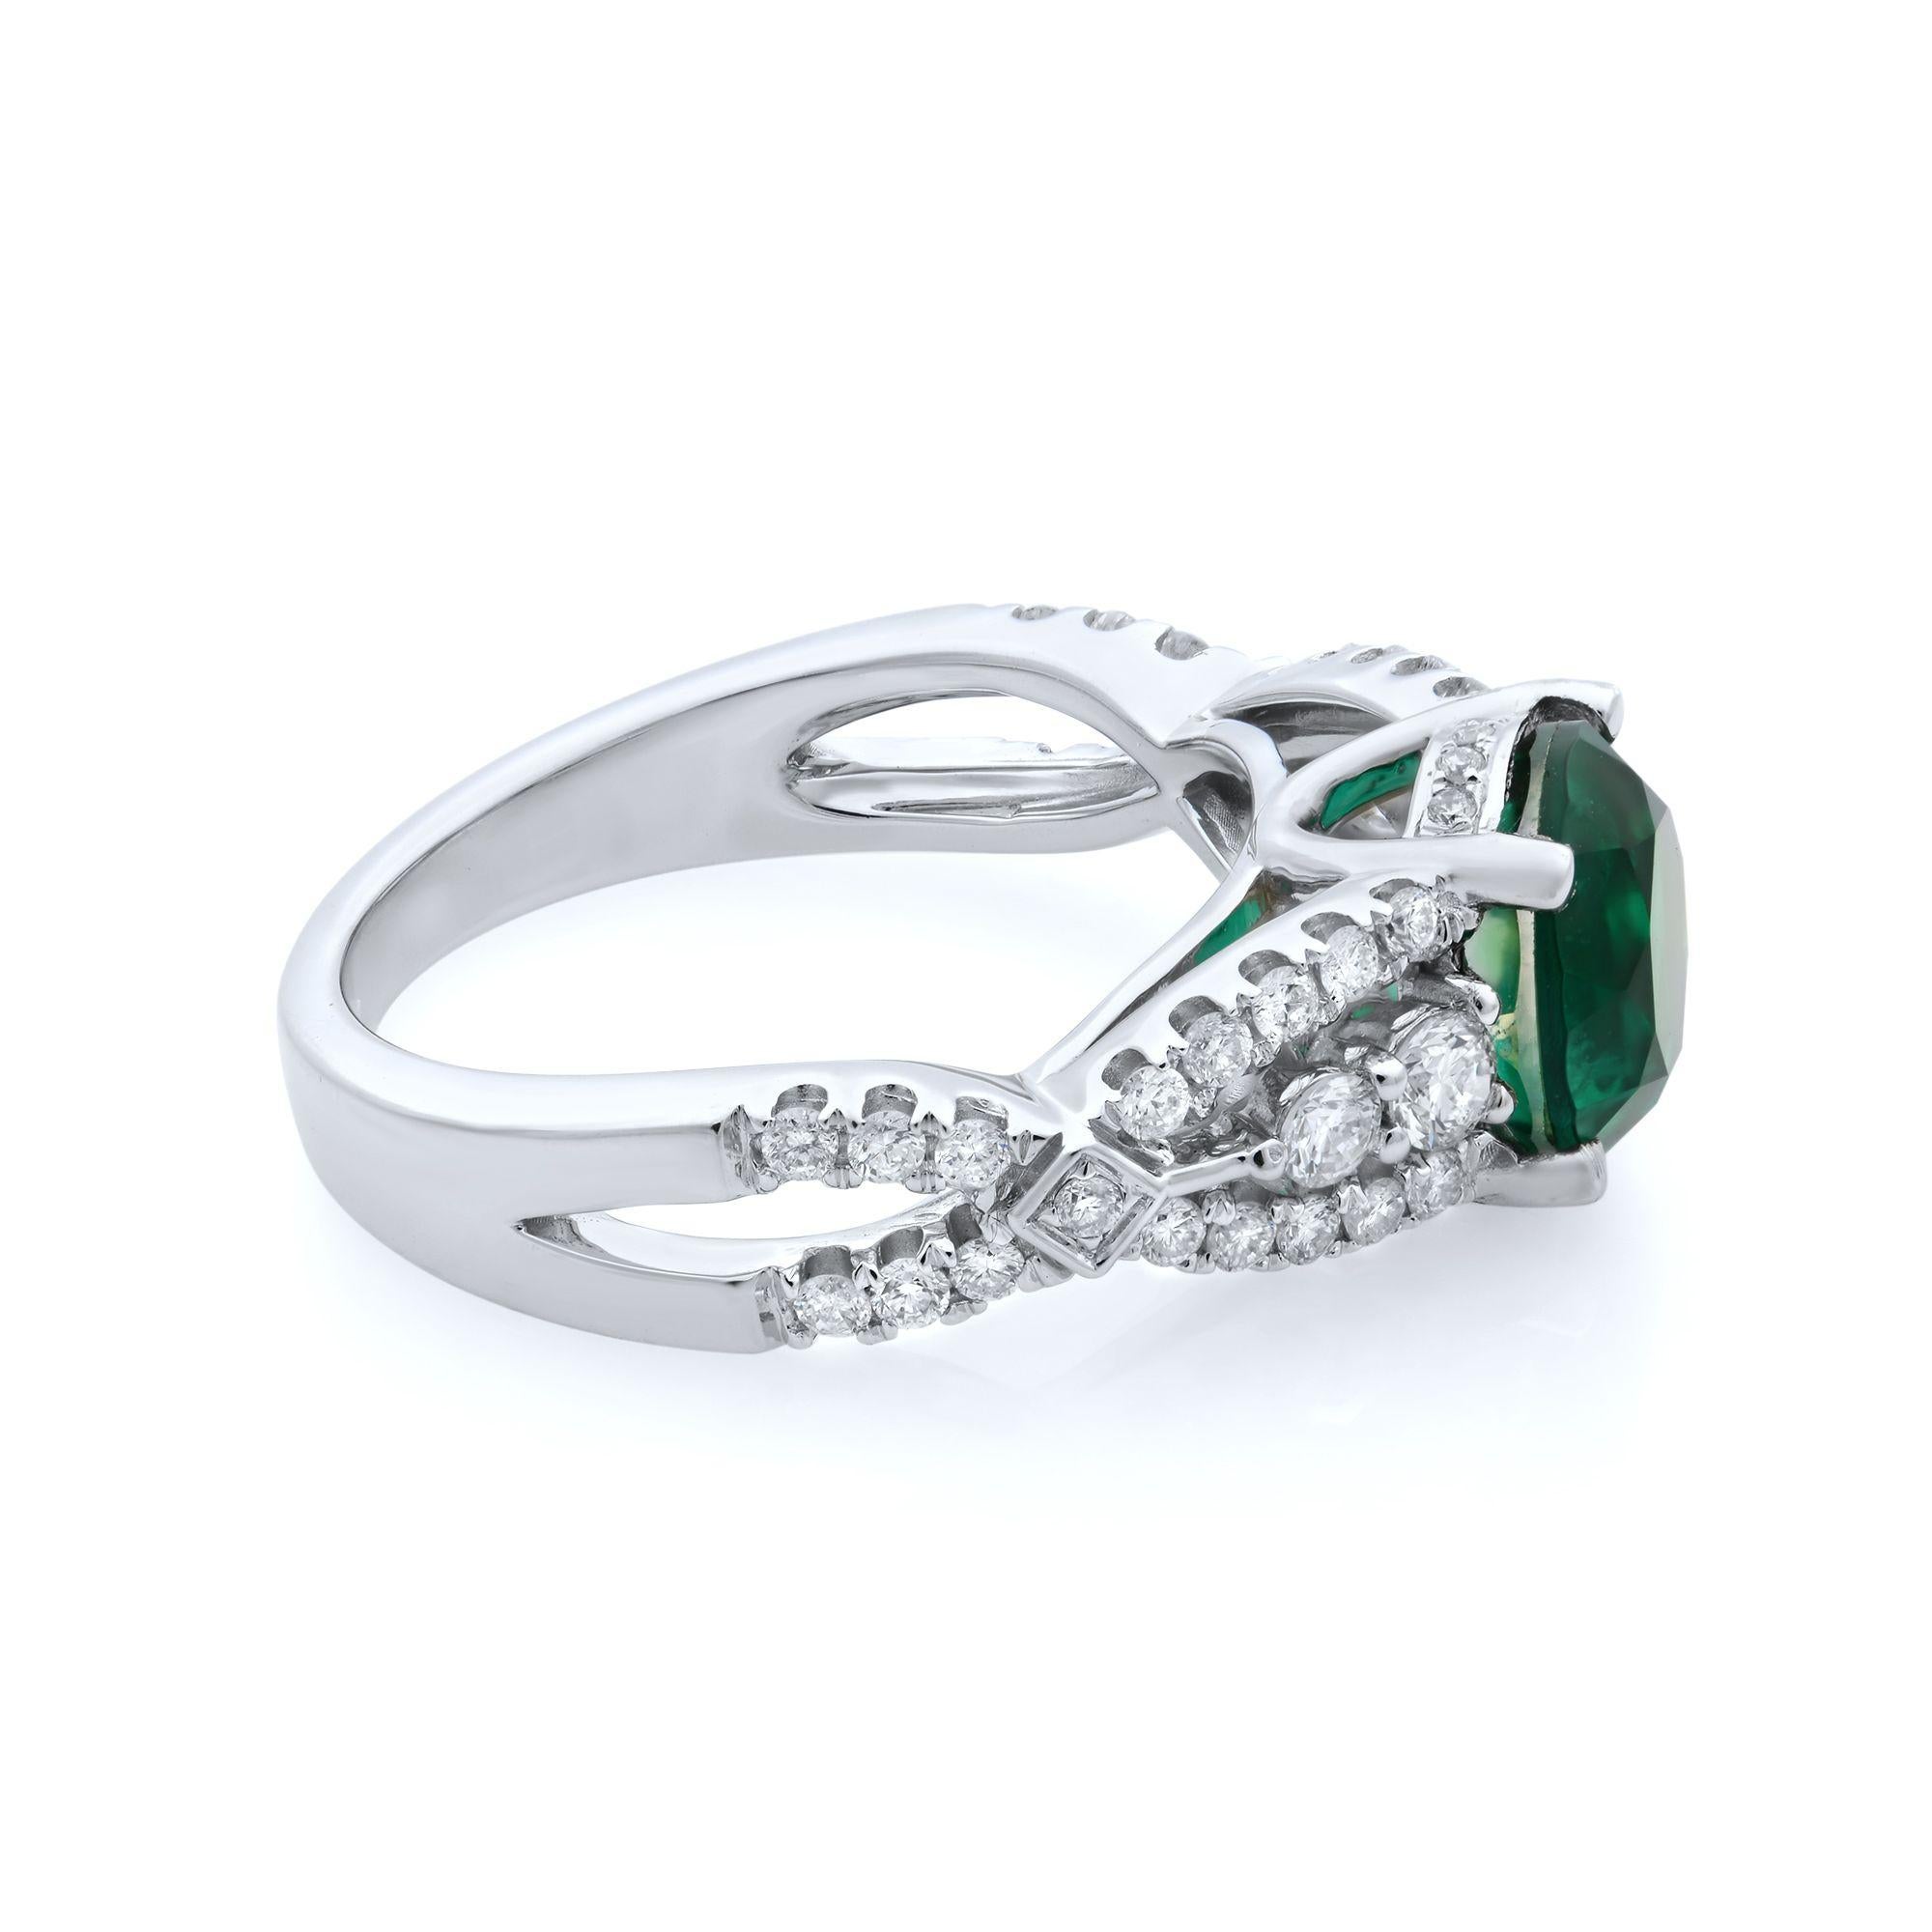 rachel green ring